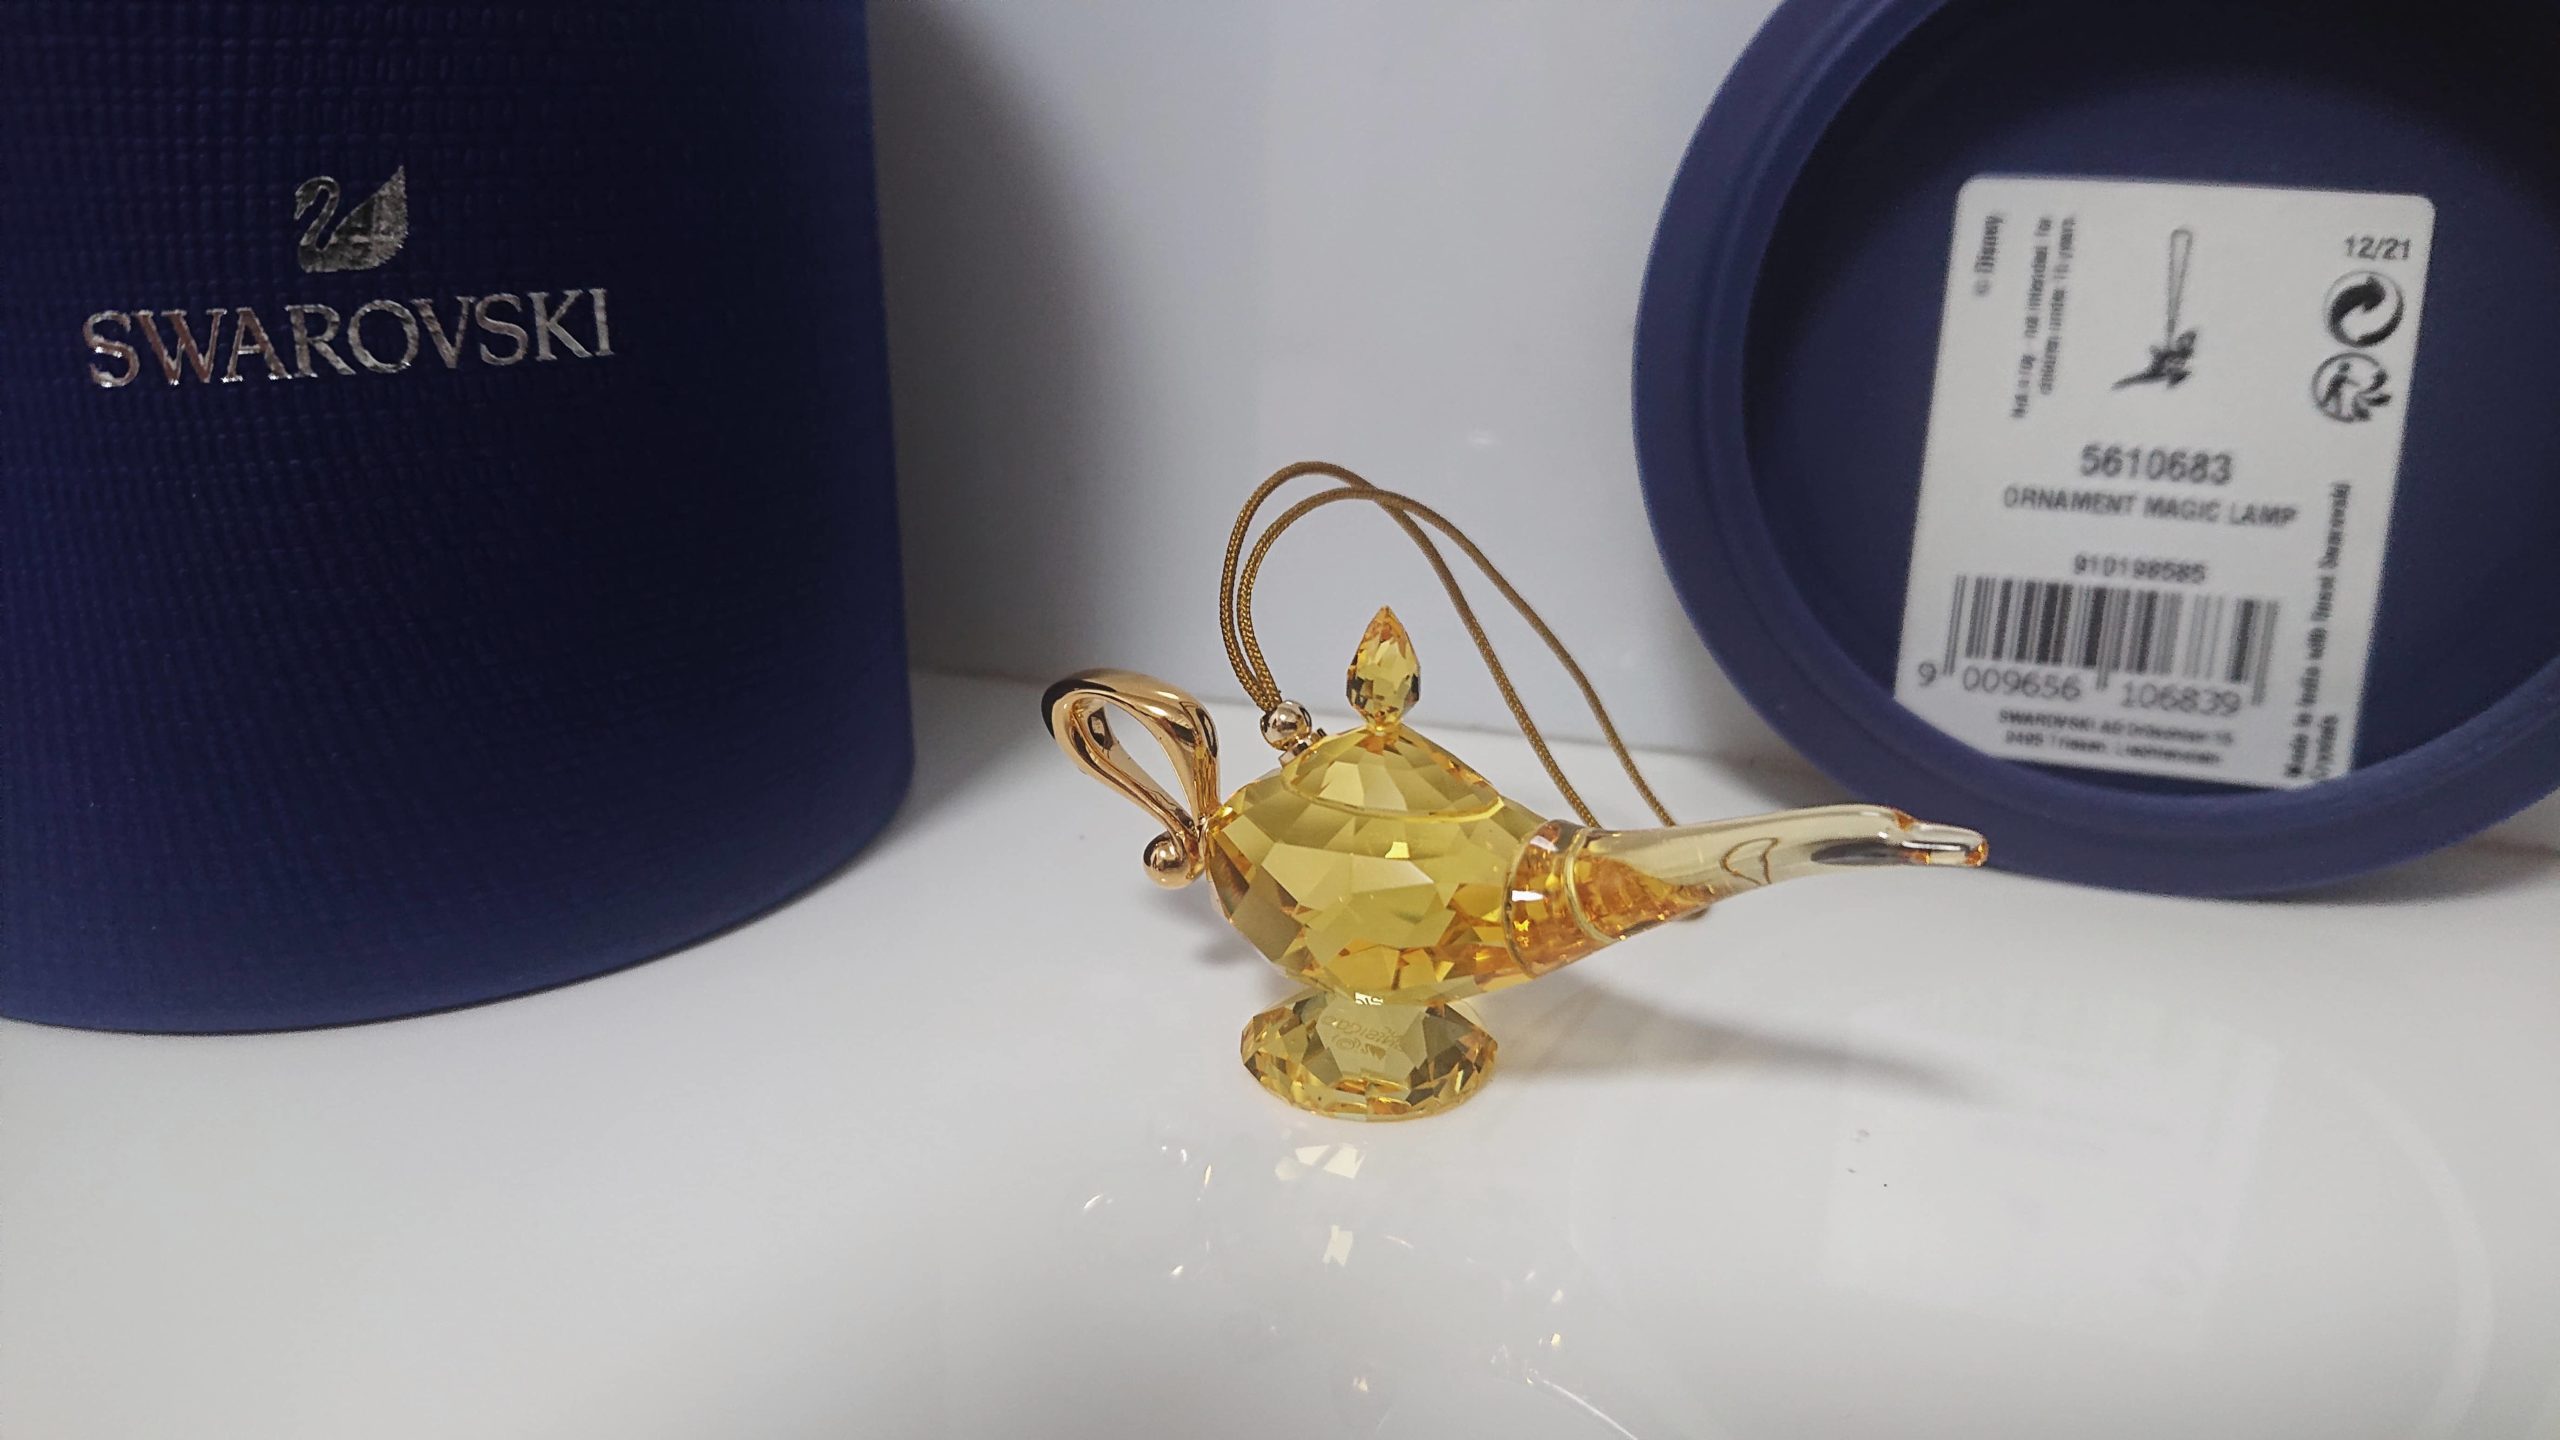 Swarovski Disney Aladdin Wunderlampe Ornament 5610683 Magic Collectorshop Lamp Sammler 